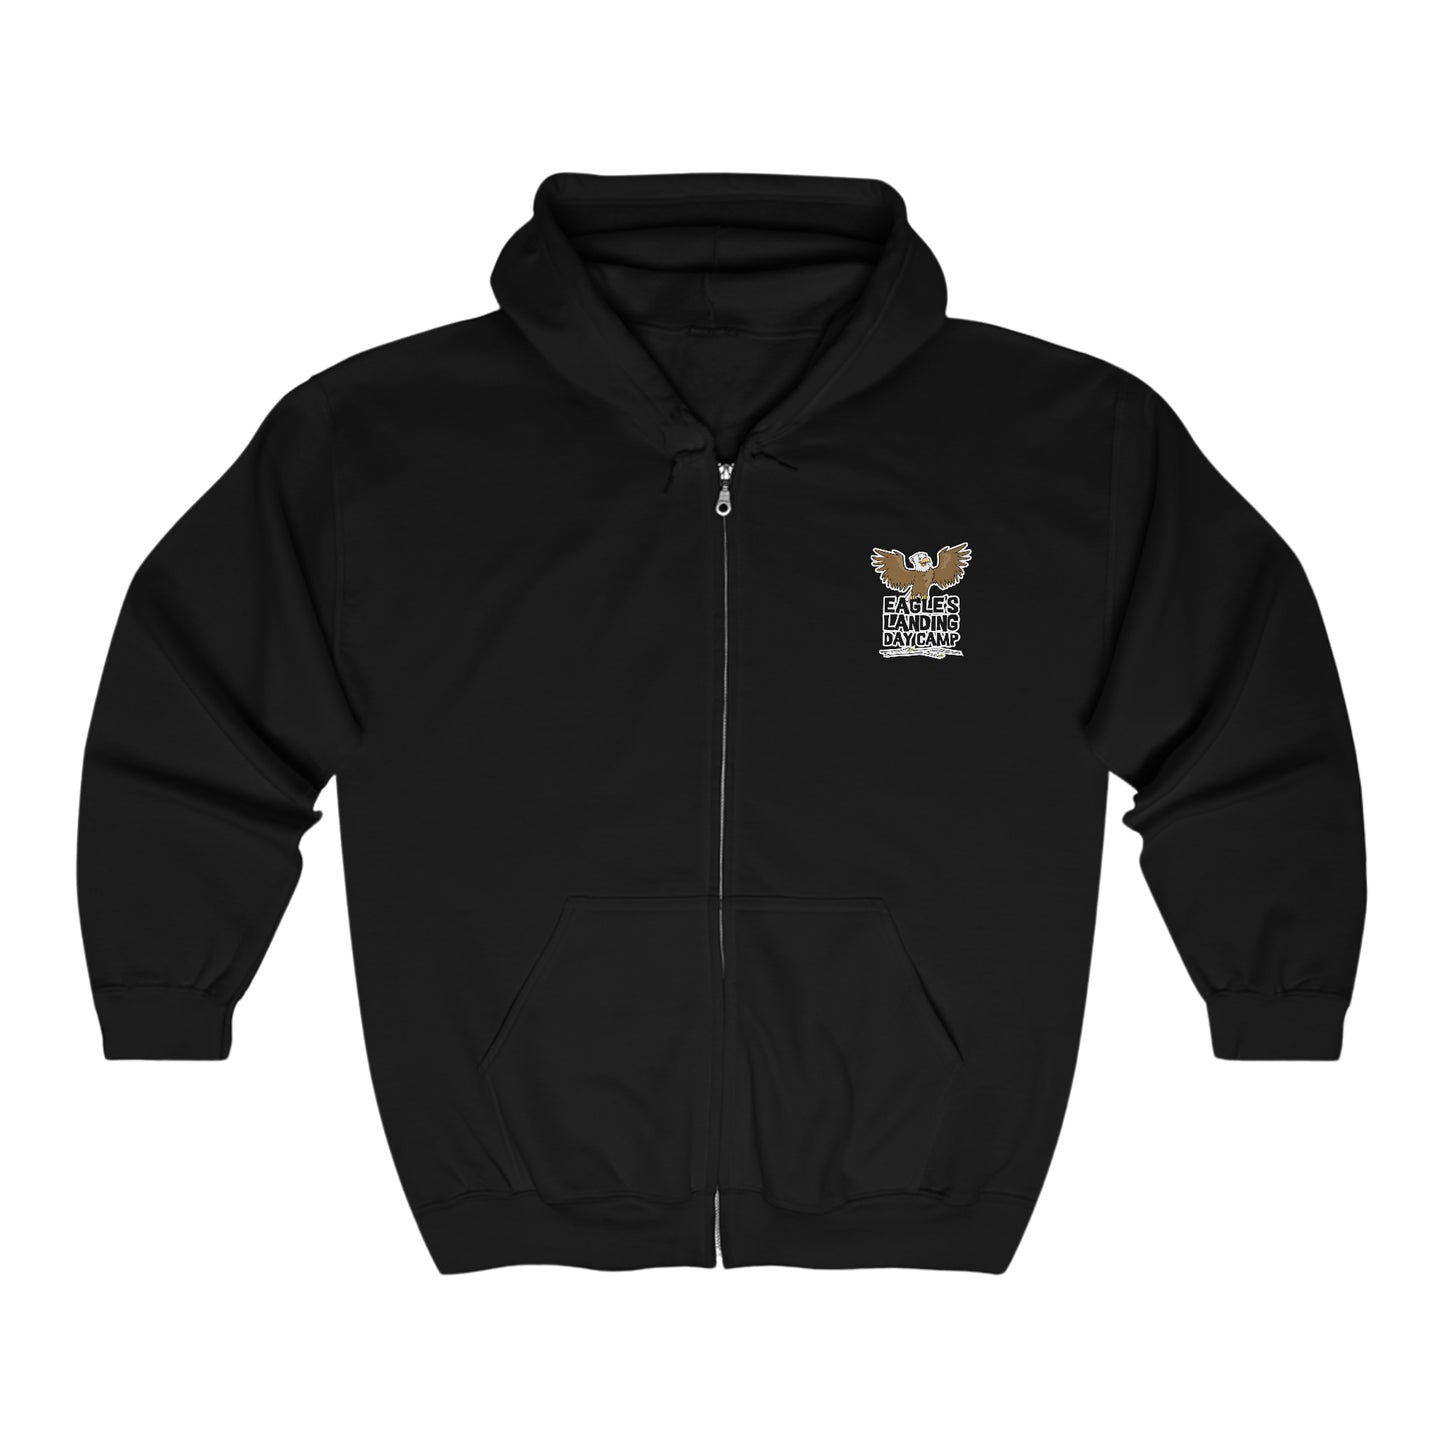 STAFF Unisex Heavy Blend™ Full Zip Hooded Sweatshirt